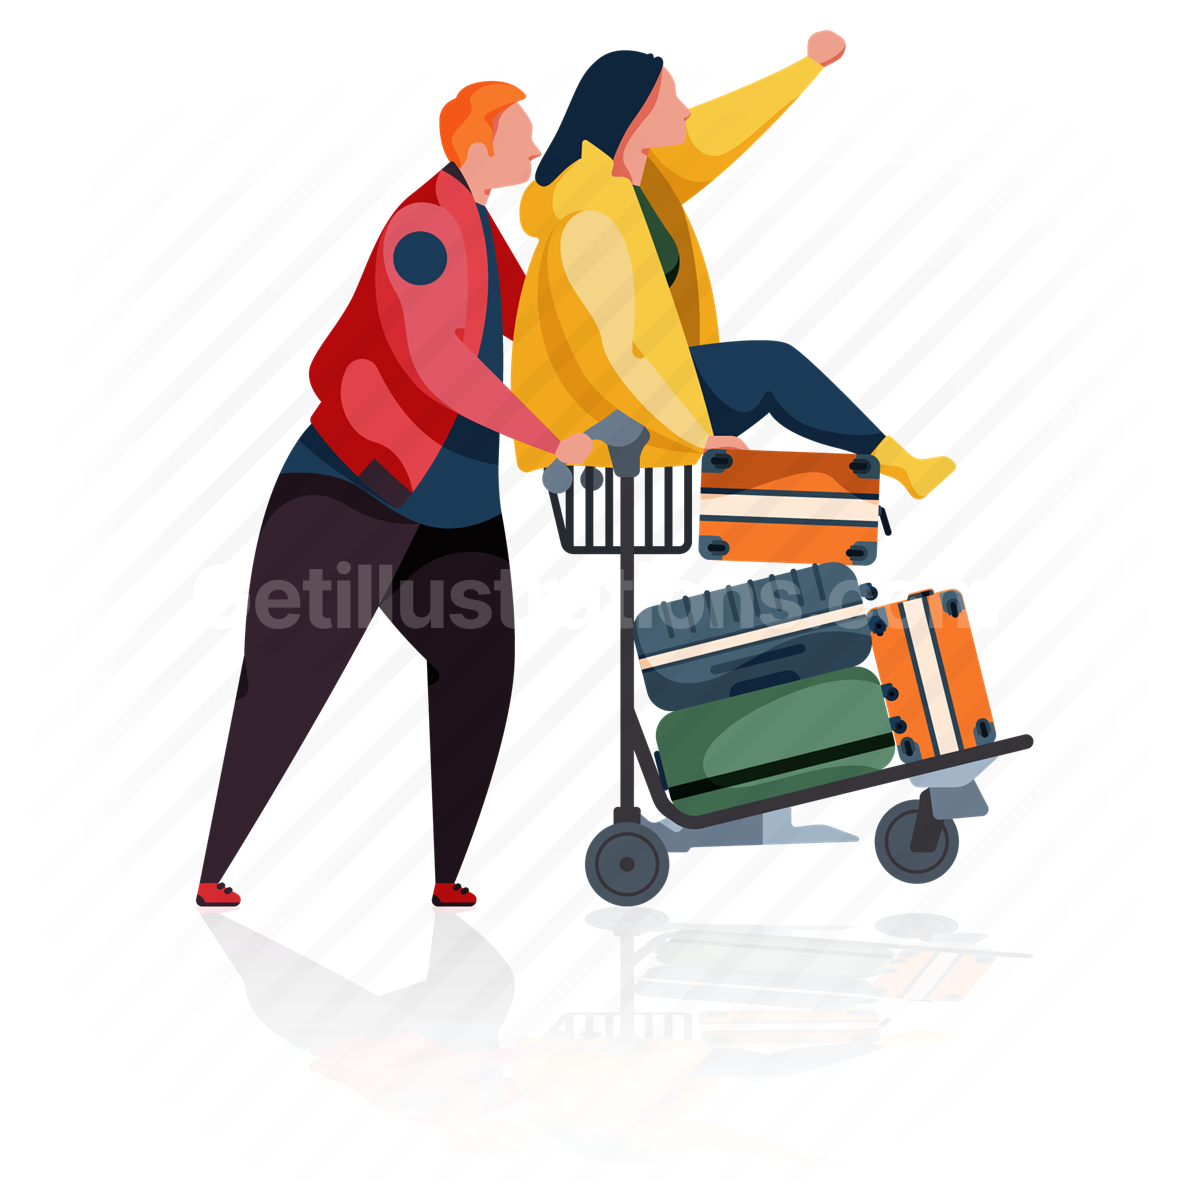 man, woman, couple, suitcase, luggage, baggage